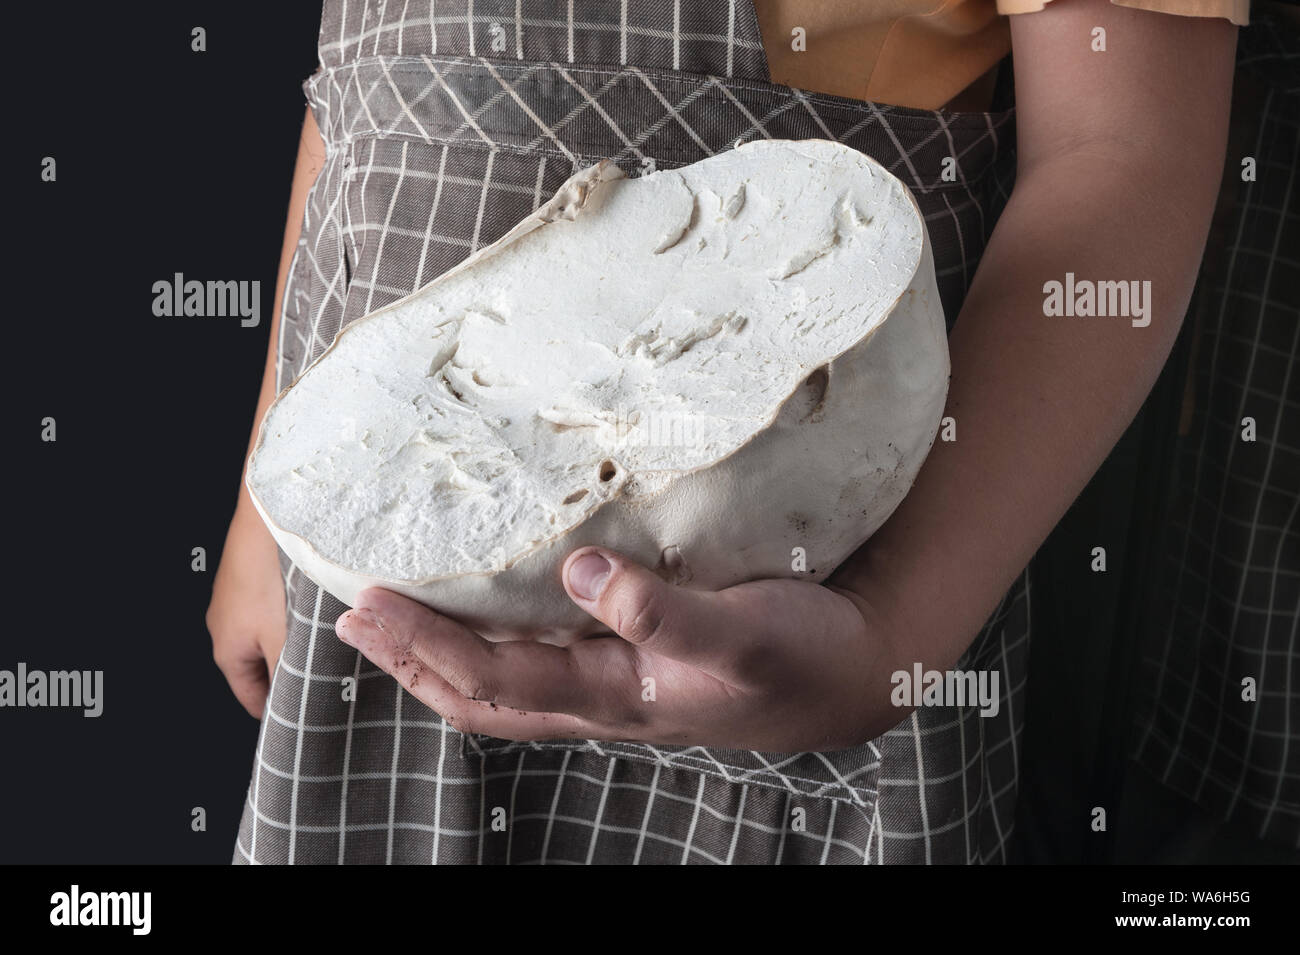 Seta gigante puffball blanca en la mano agricultor Foto de stock